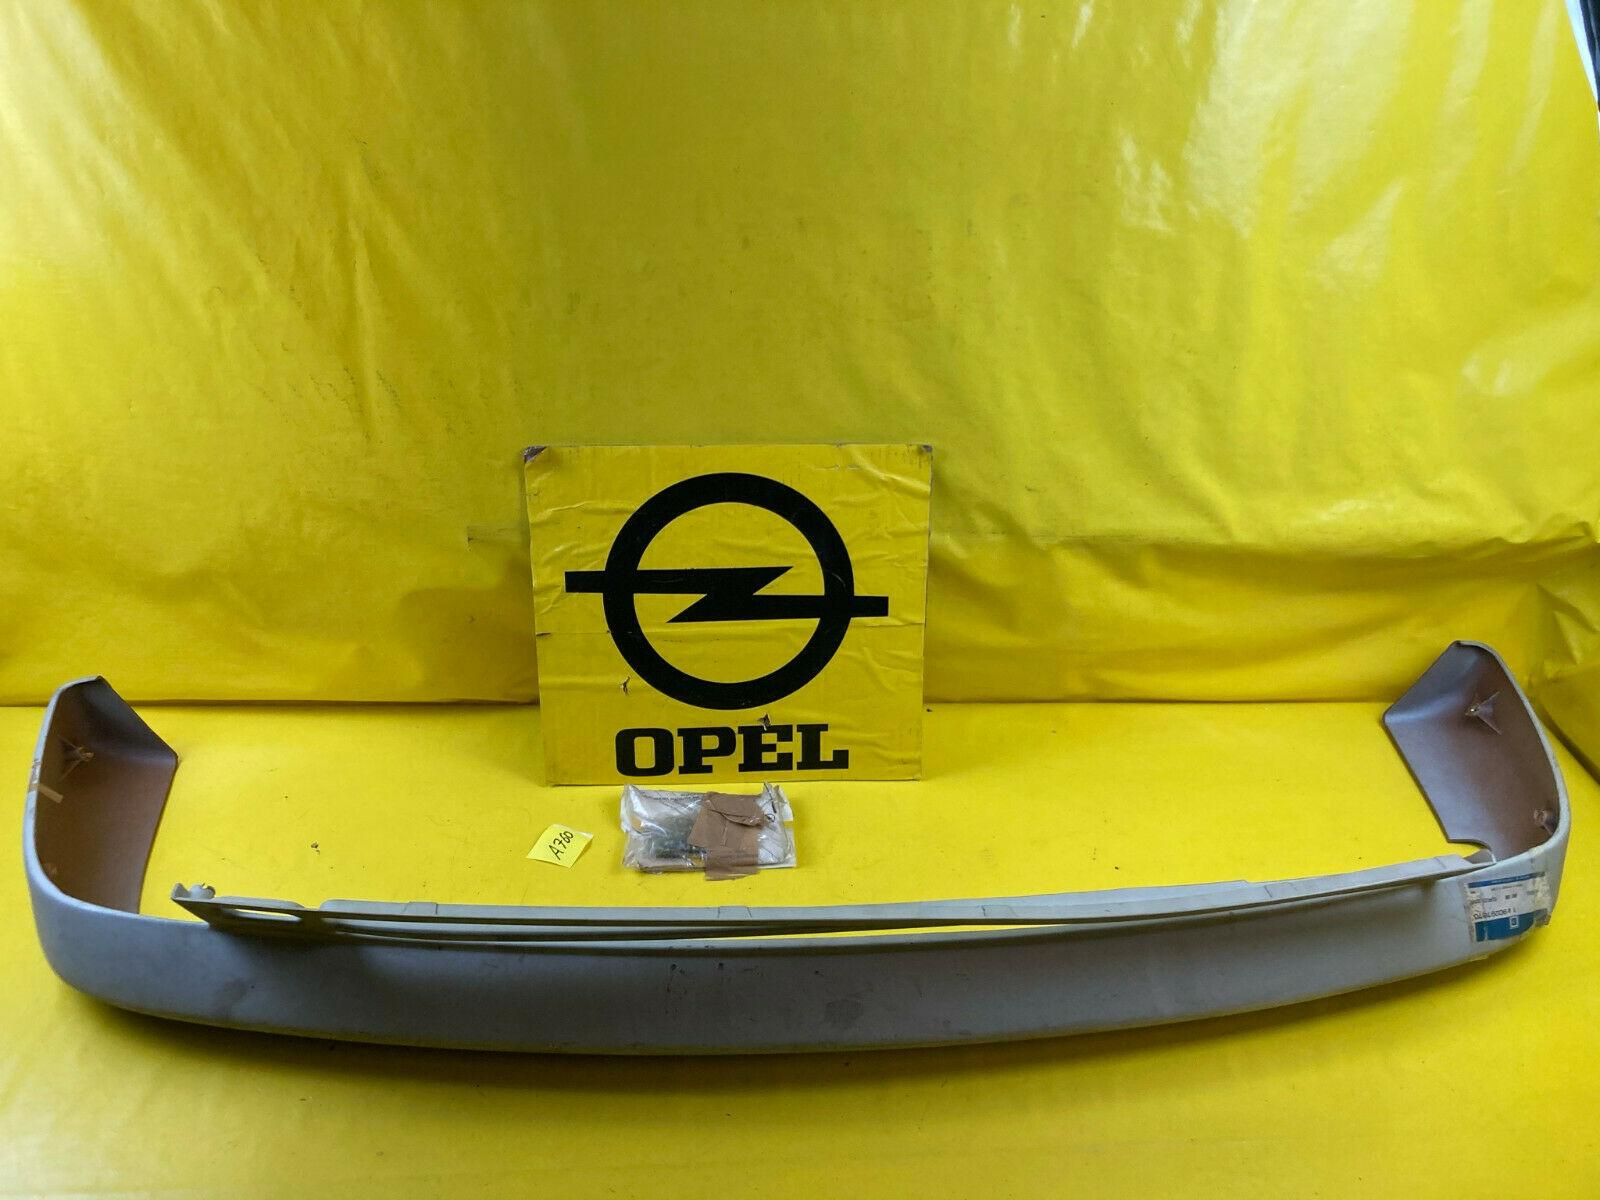 Frontspoiler / Frontsplitter für Opel Calibra günstig bestellen